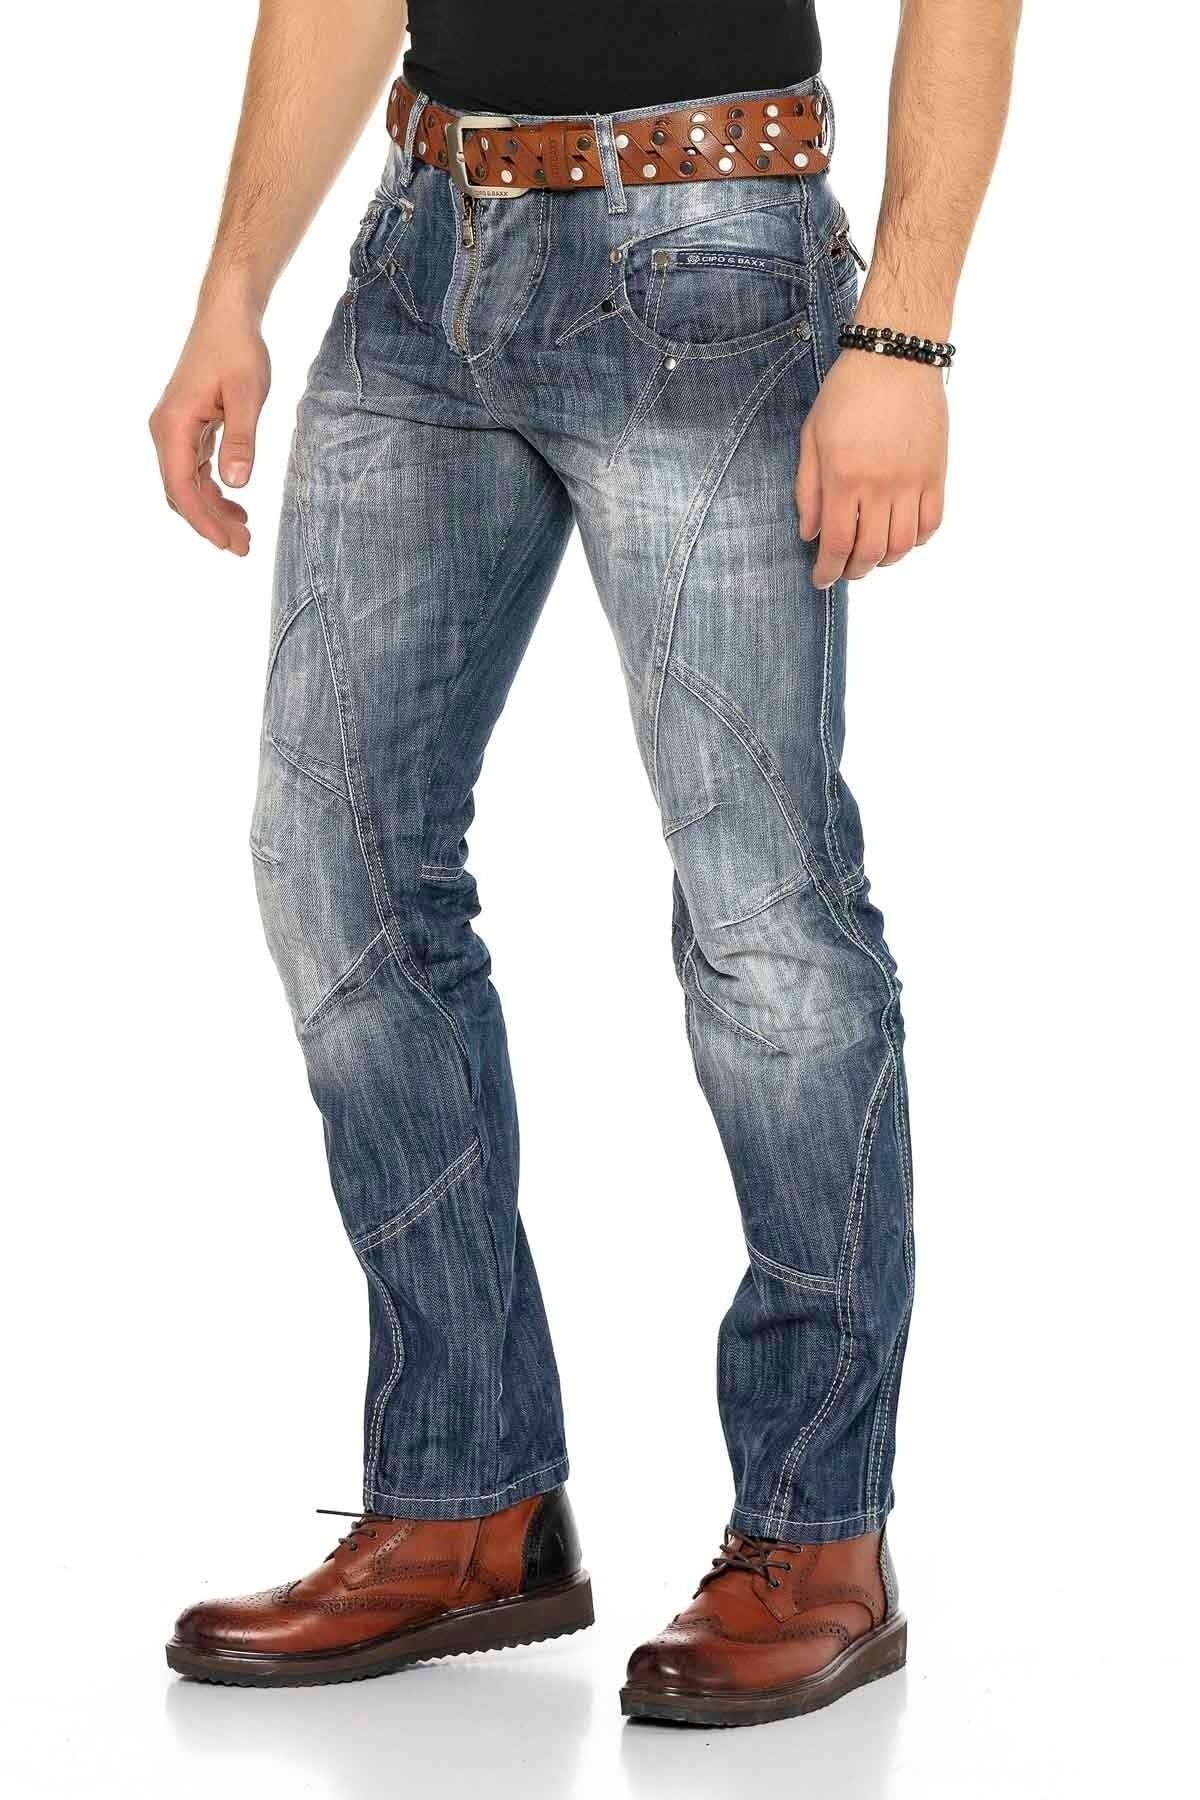 C-0751 STANDARD men's jeans STRAIGHT FIT